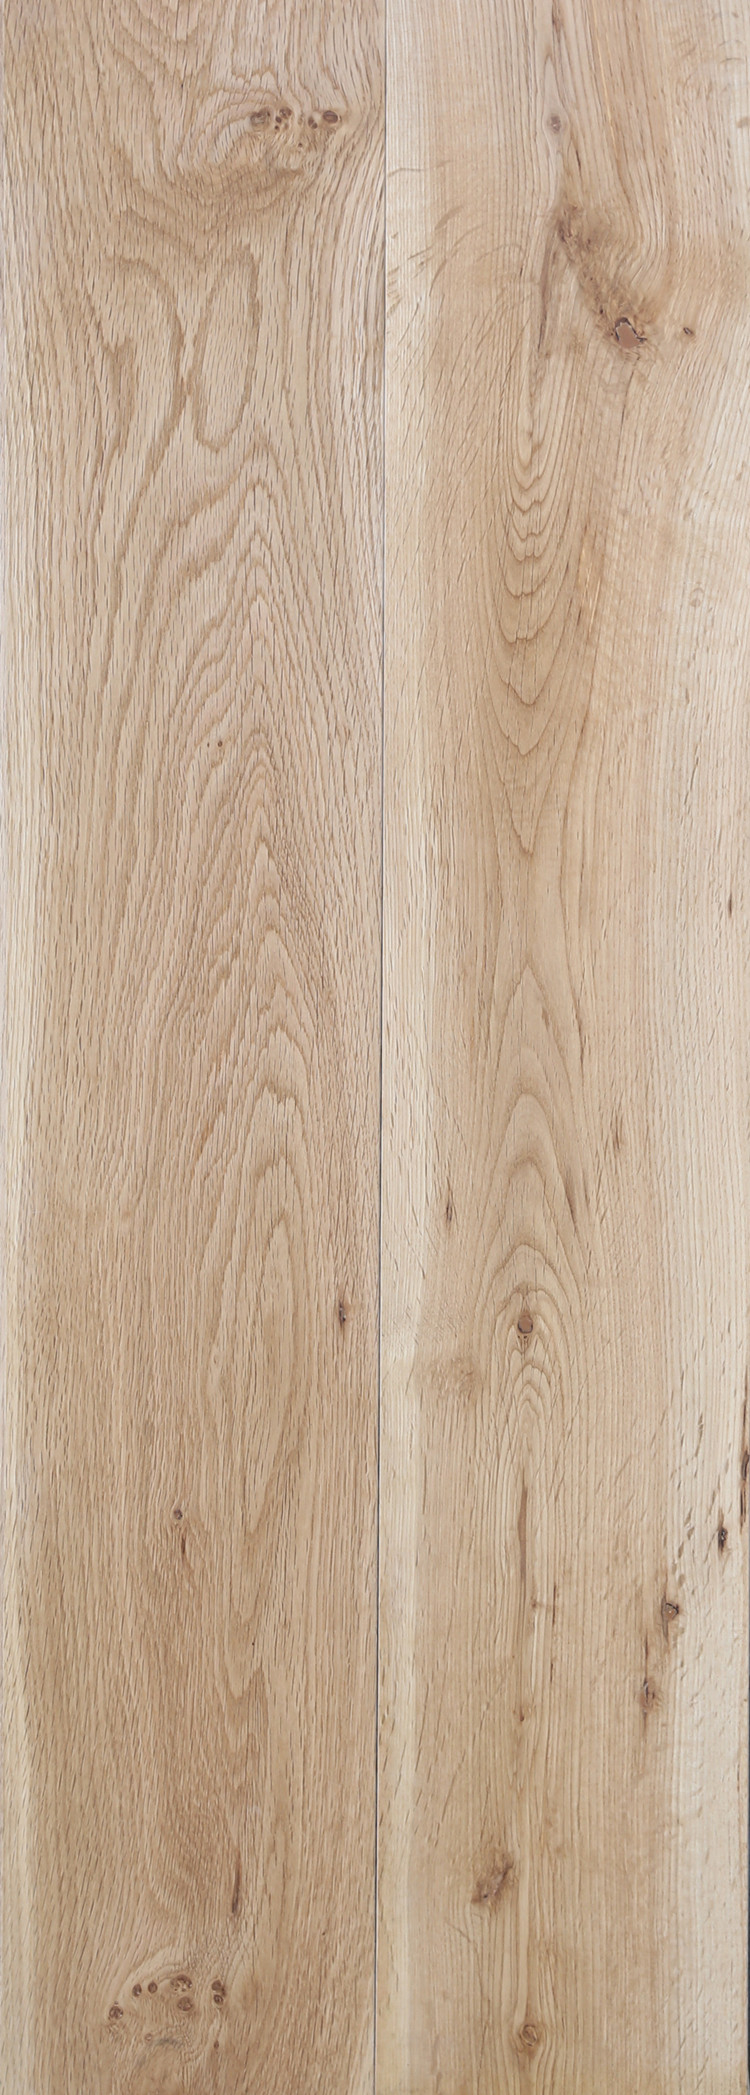 S69 - Oak wood solid flooring